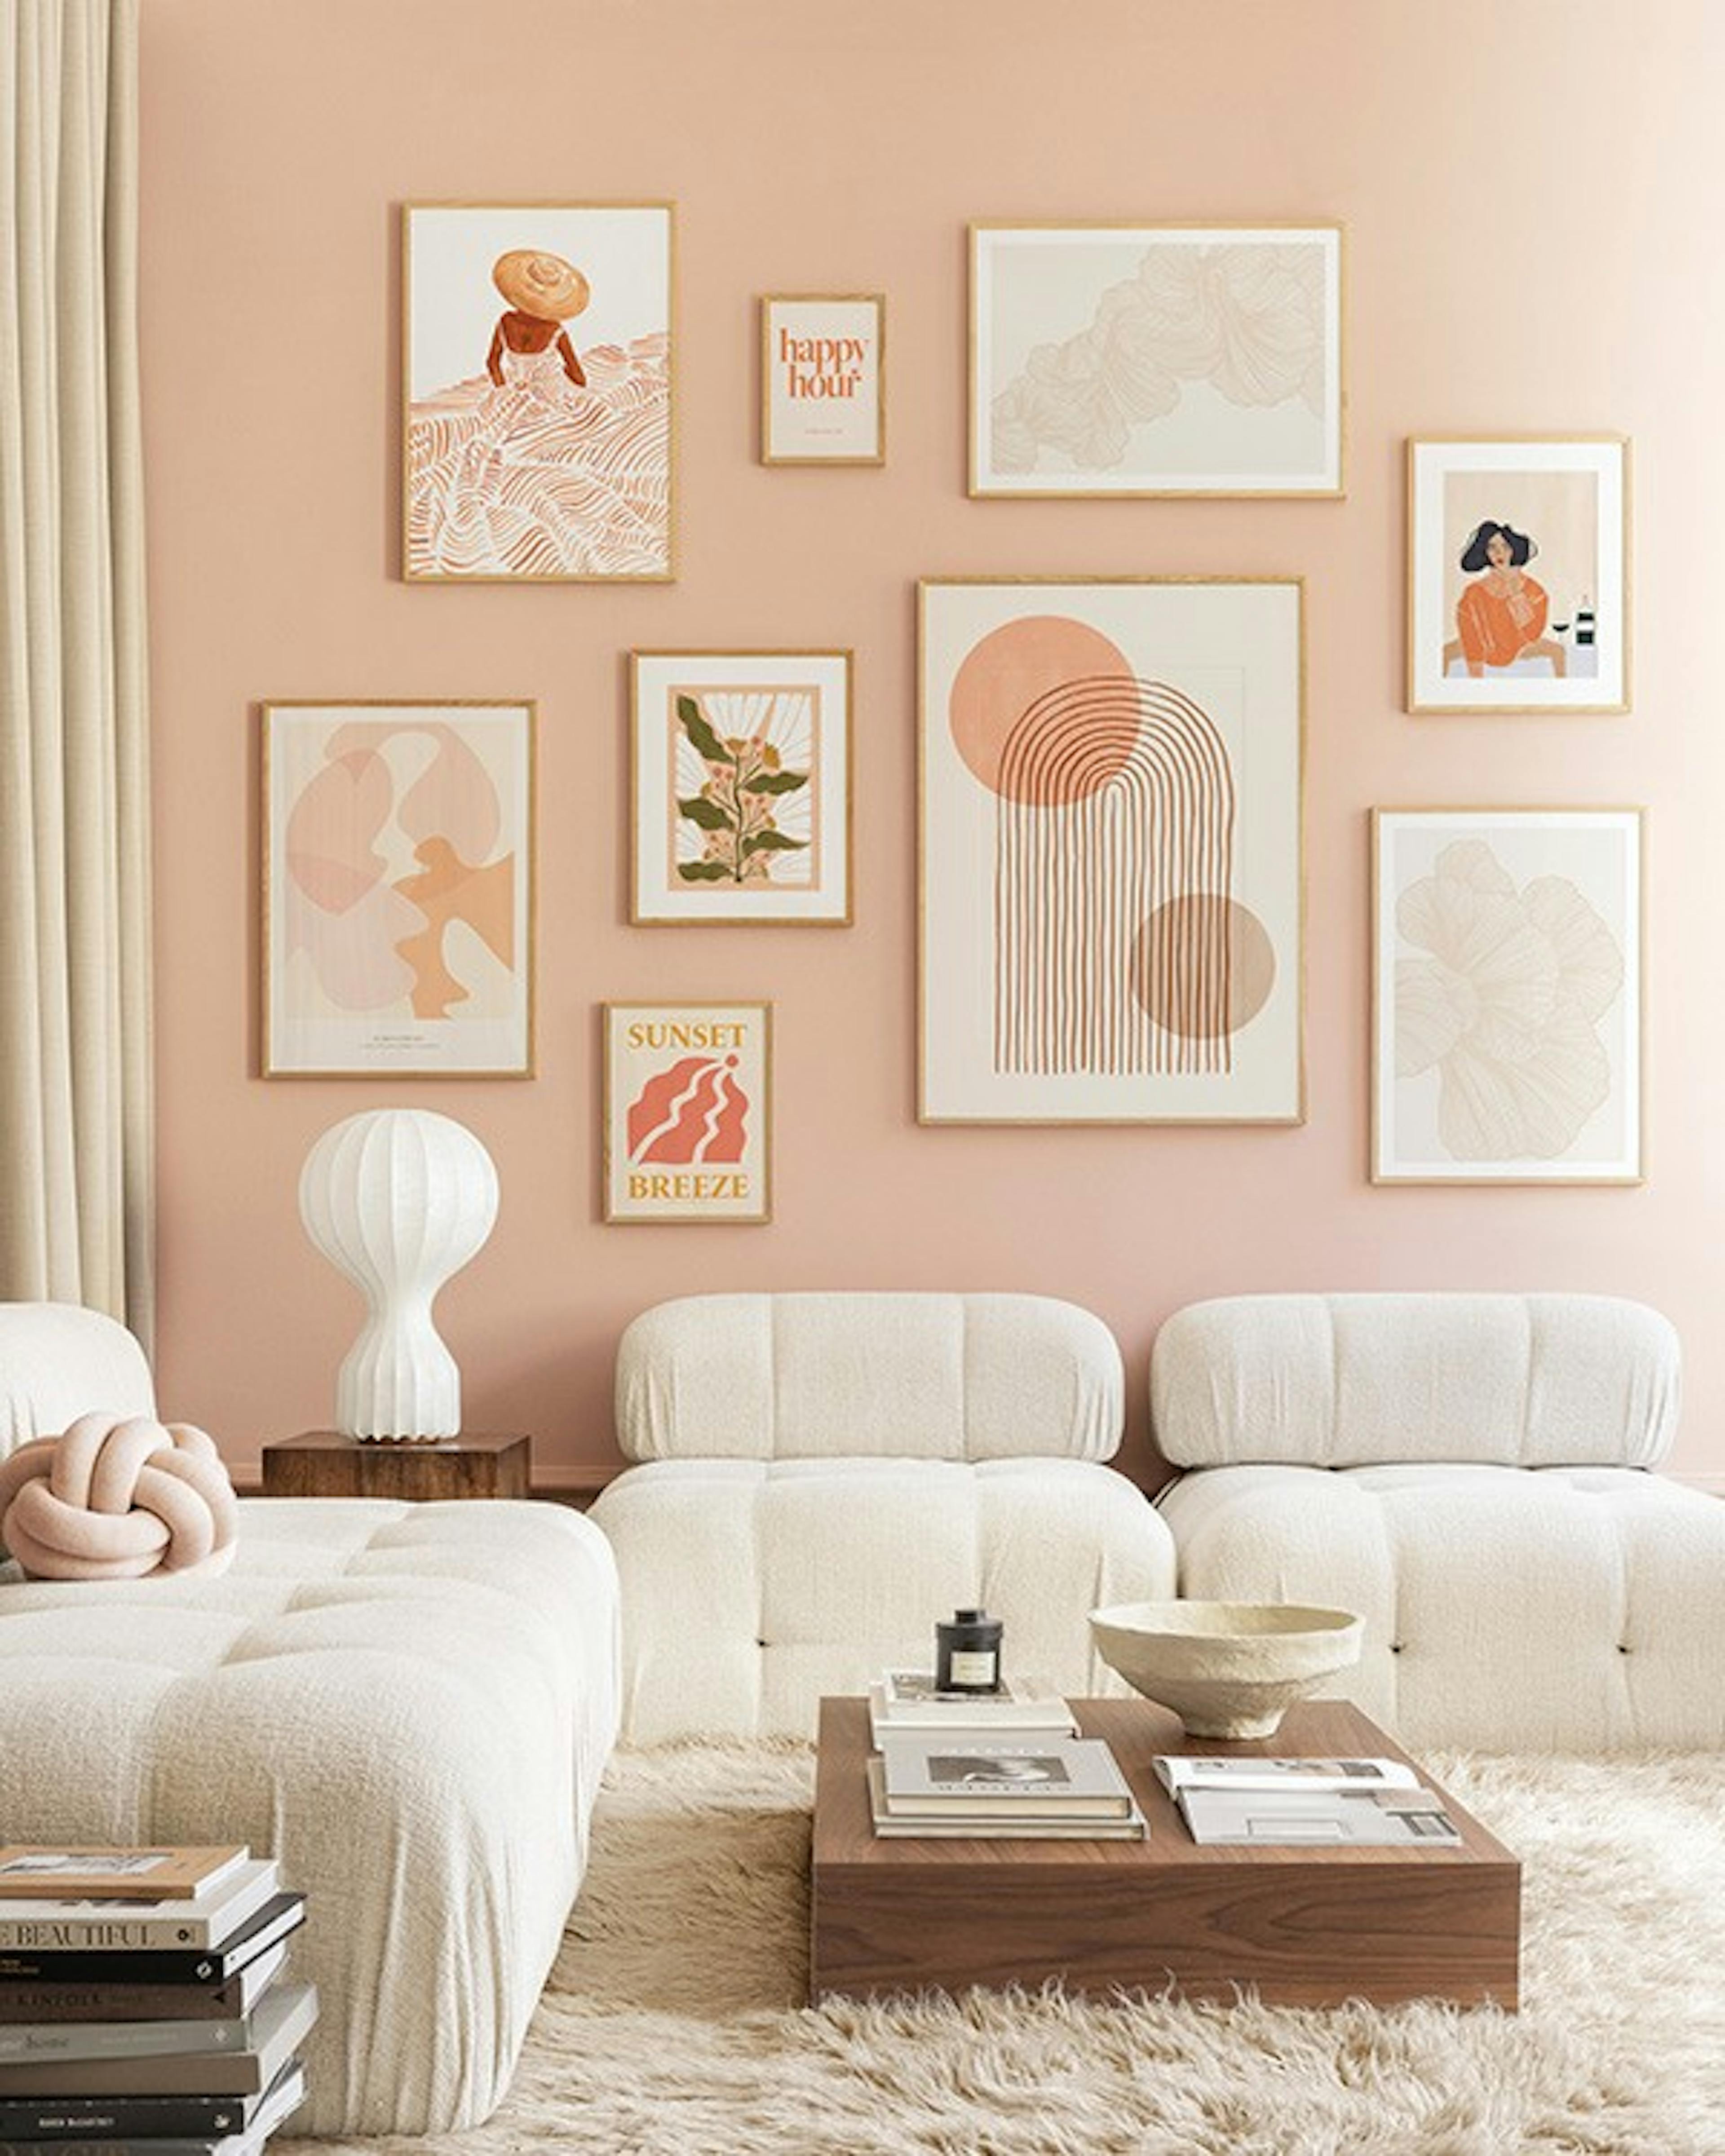 Peachy livingroom fotowand